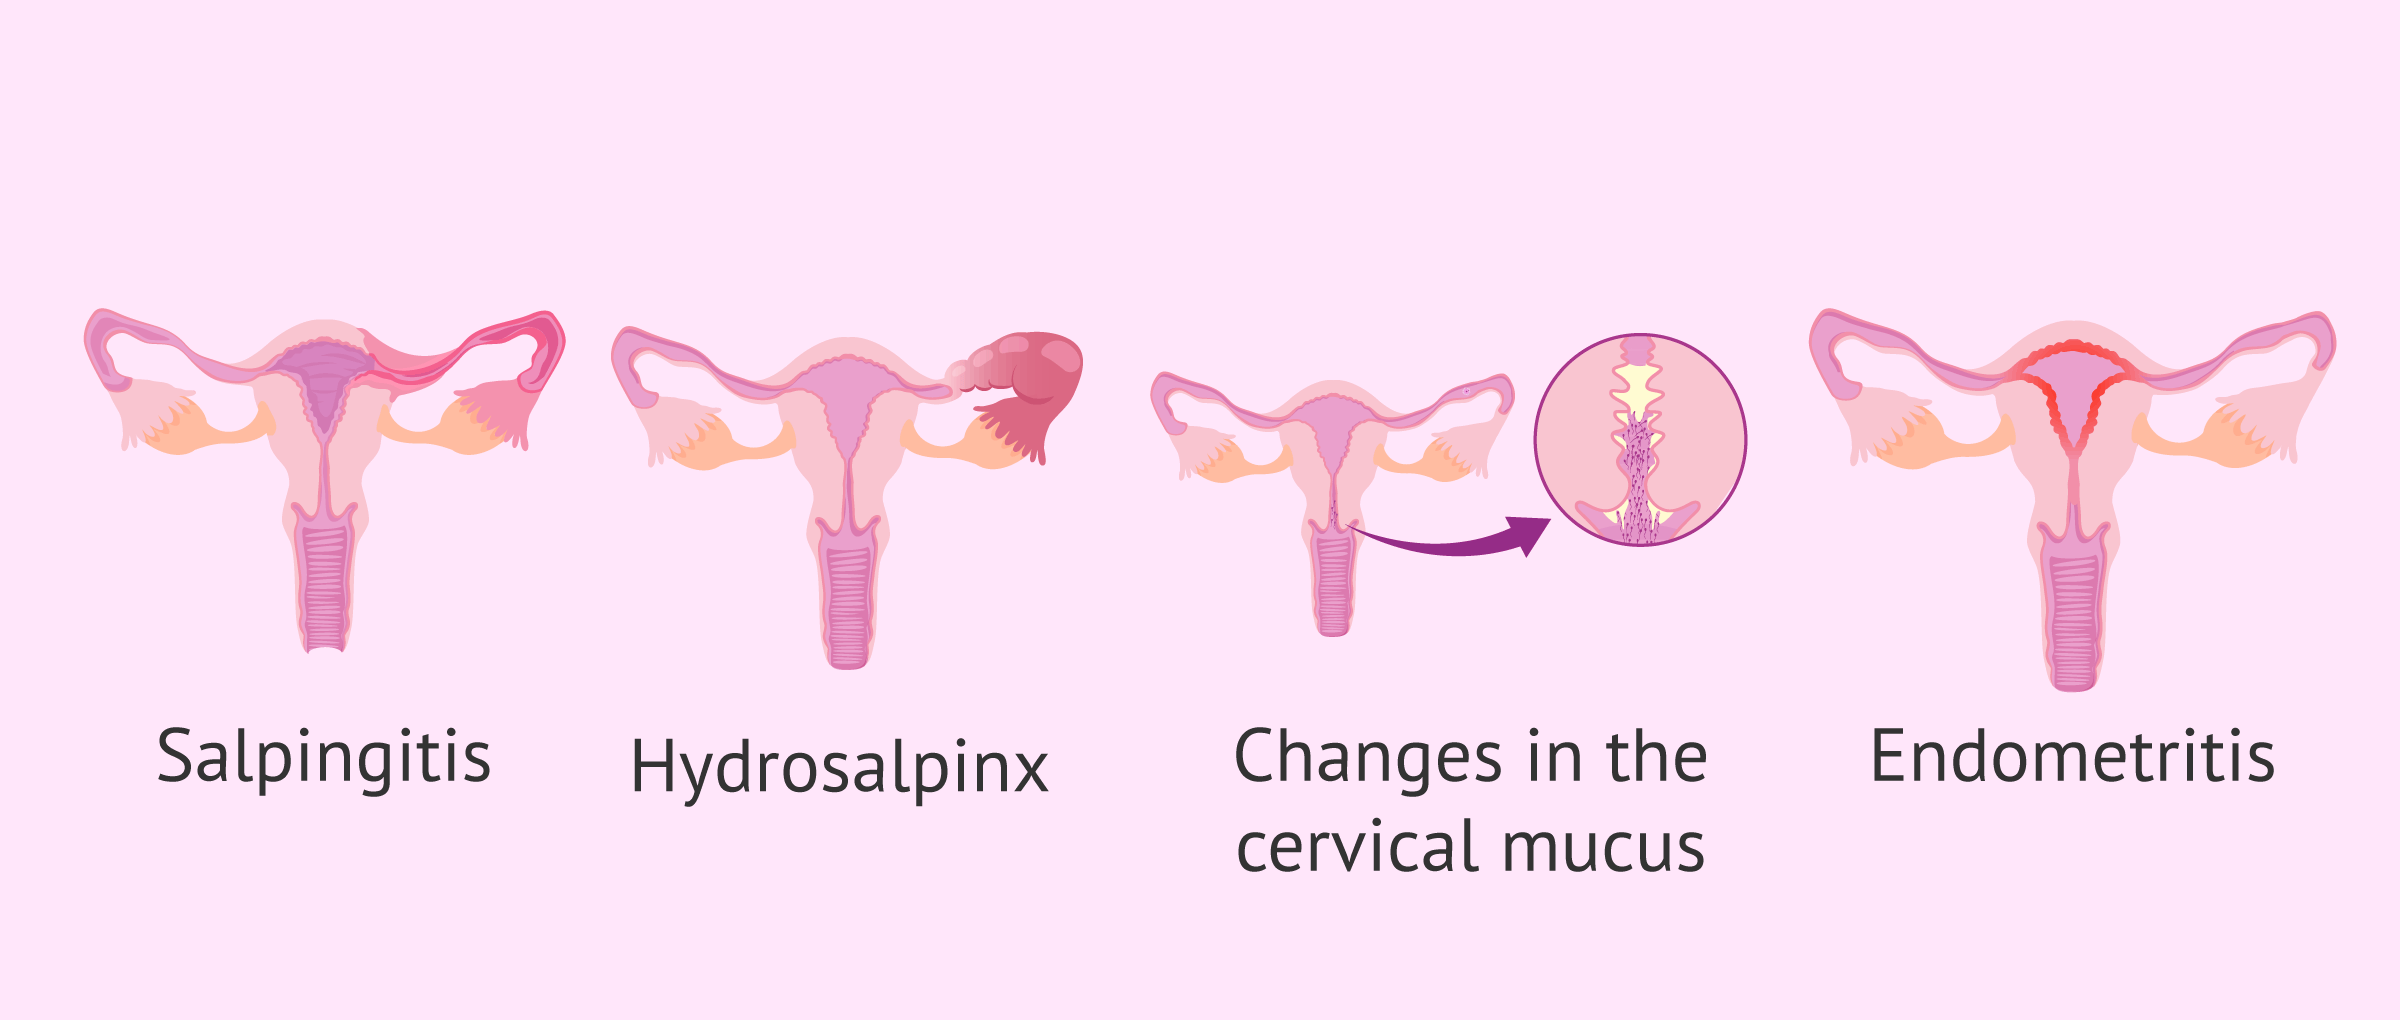 Manifestations of STDs in female fertility